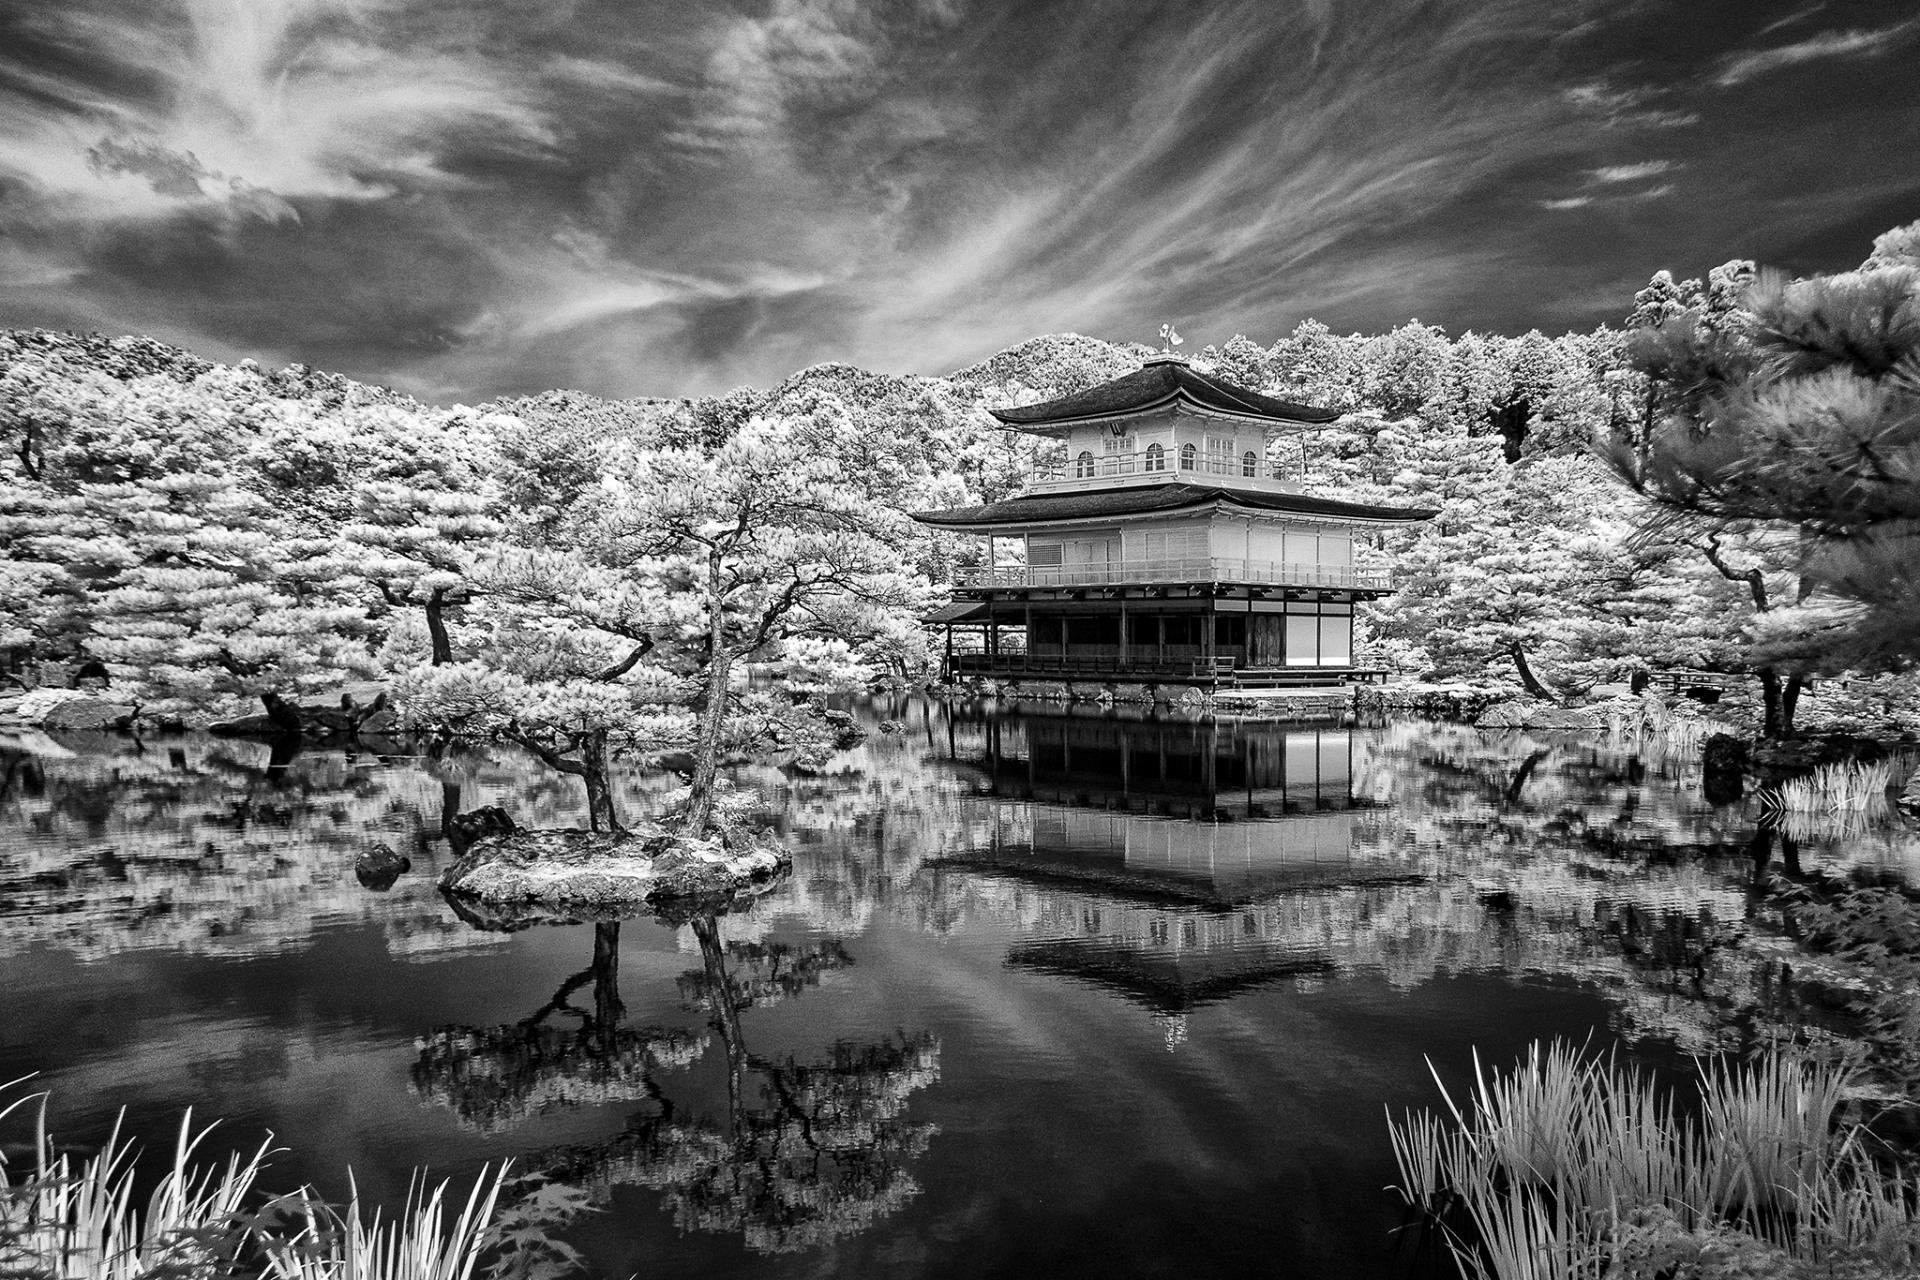 New York Photography Awards Winner - Different  Kinkahu-ji Temple II